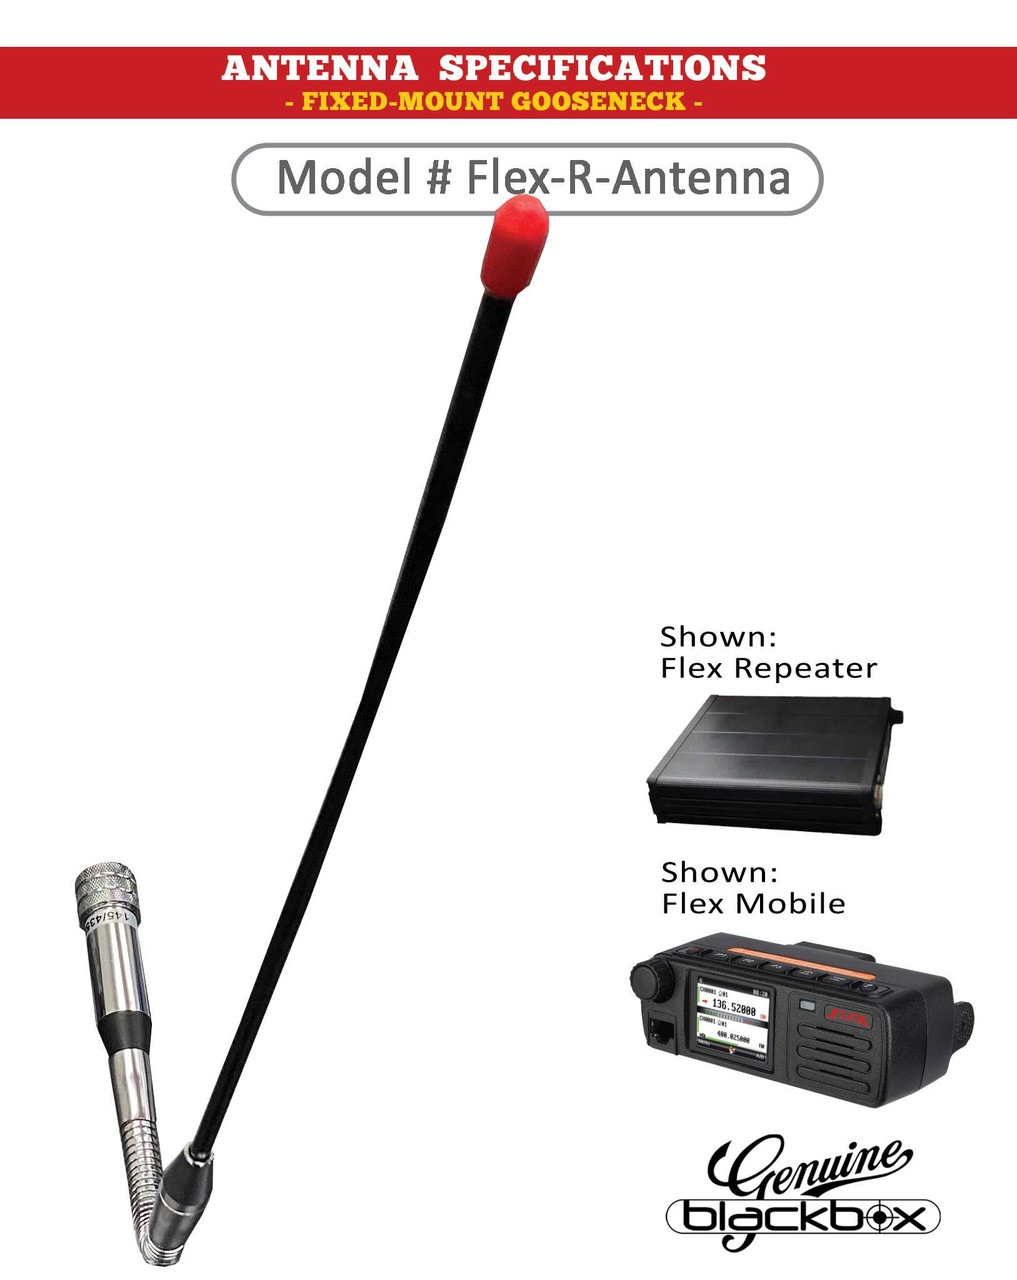 Flex Repeater Antenna [[product_type]] kleinelectronics.com 44.95